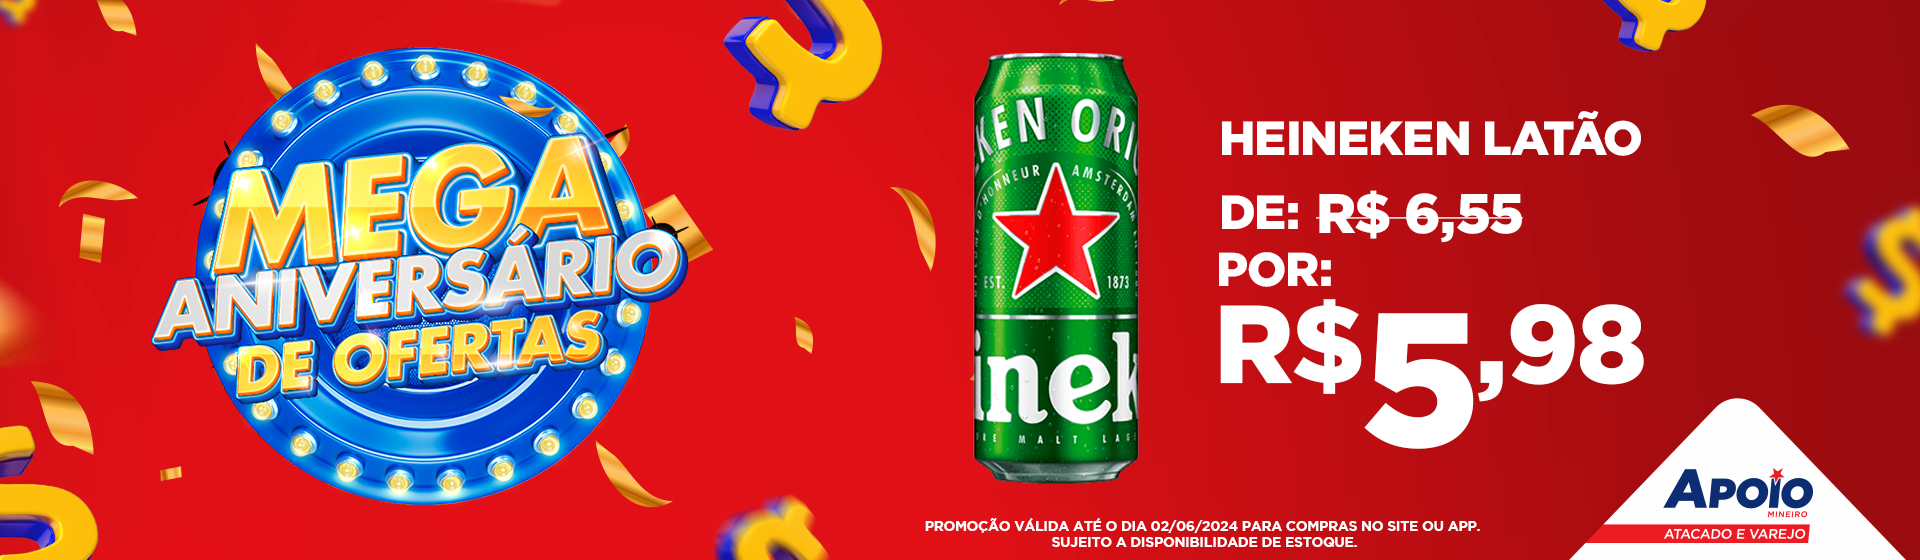 Heineken Lata até 2/06